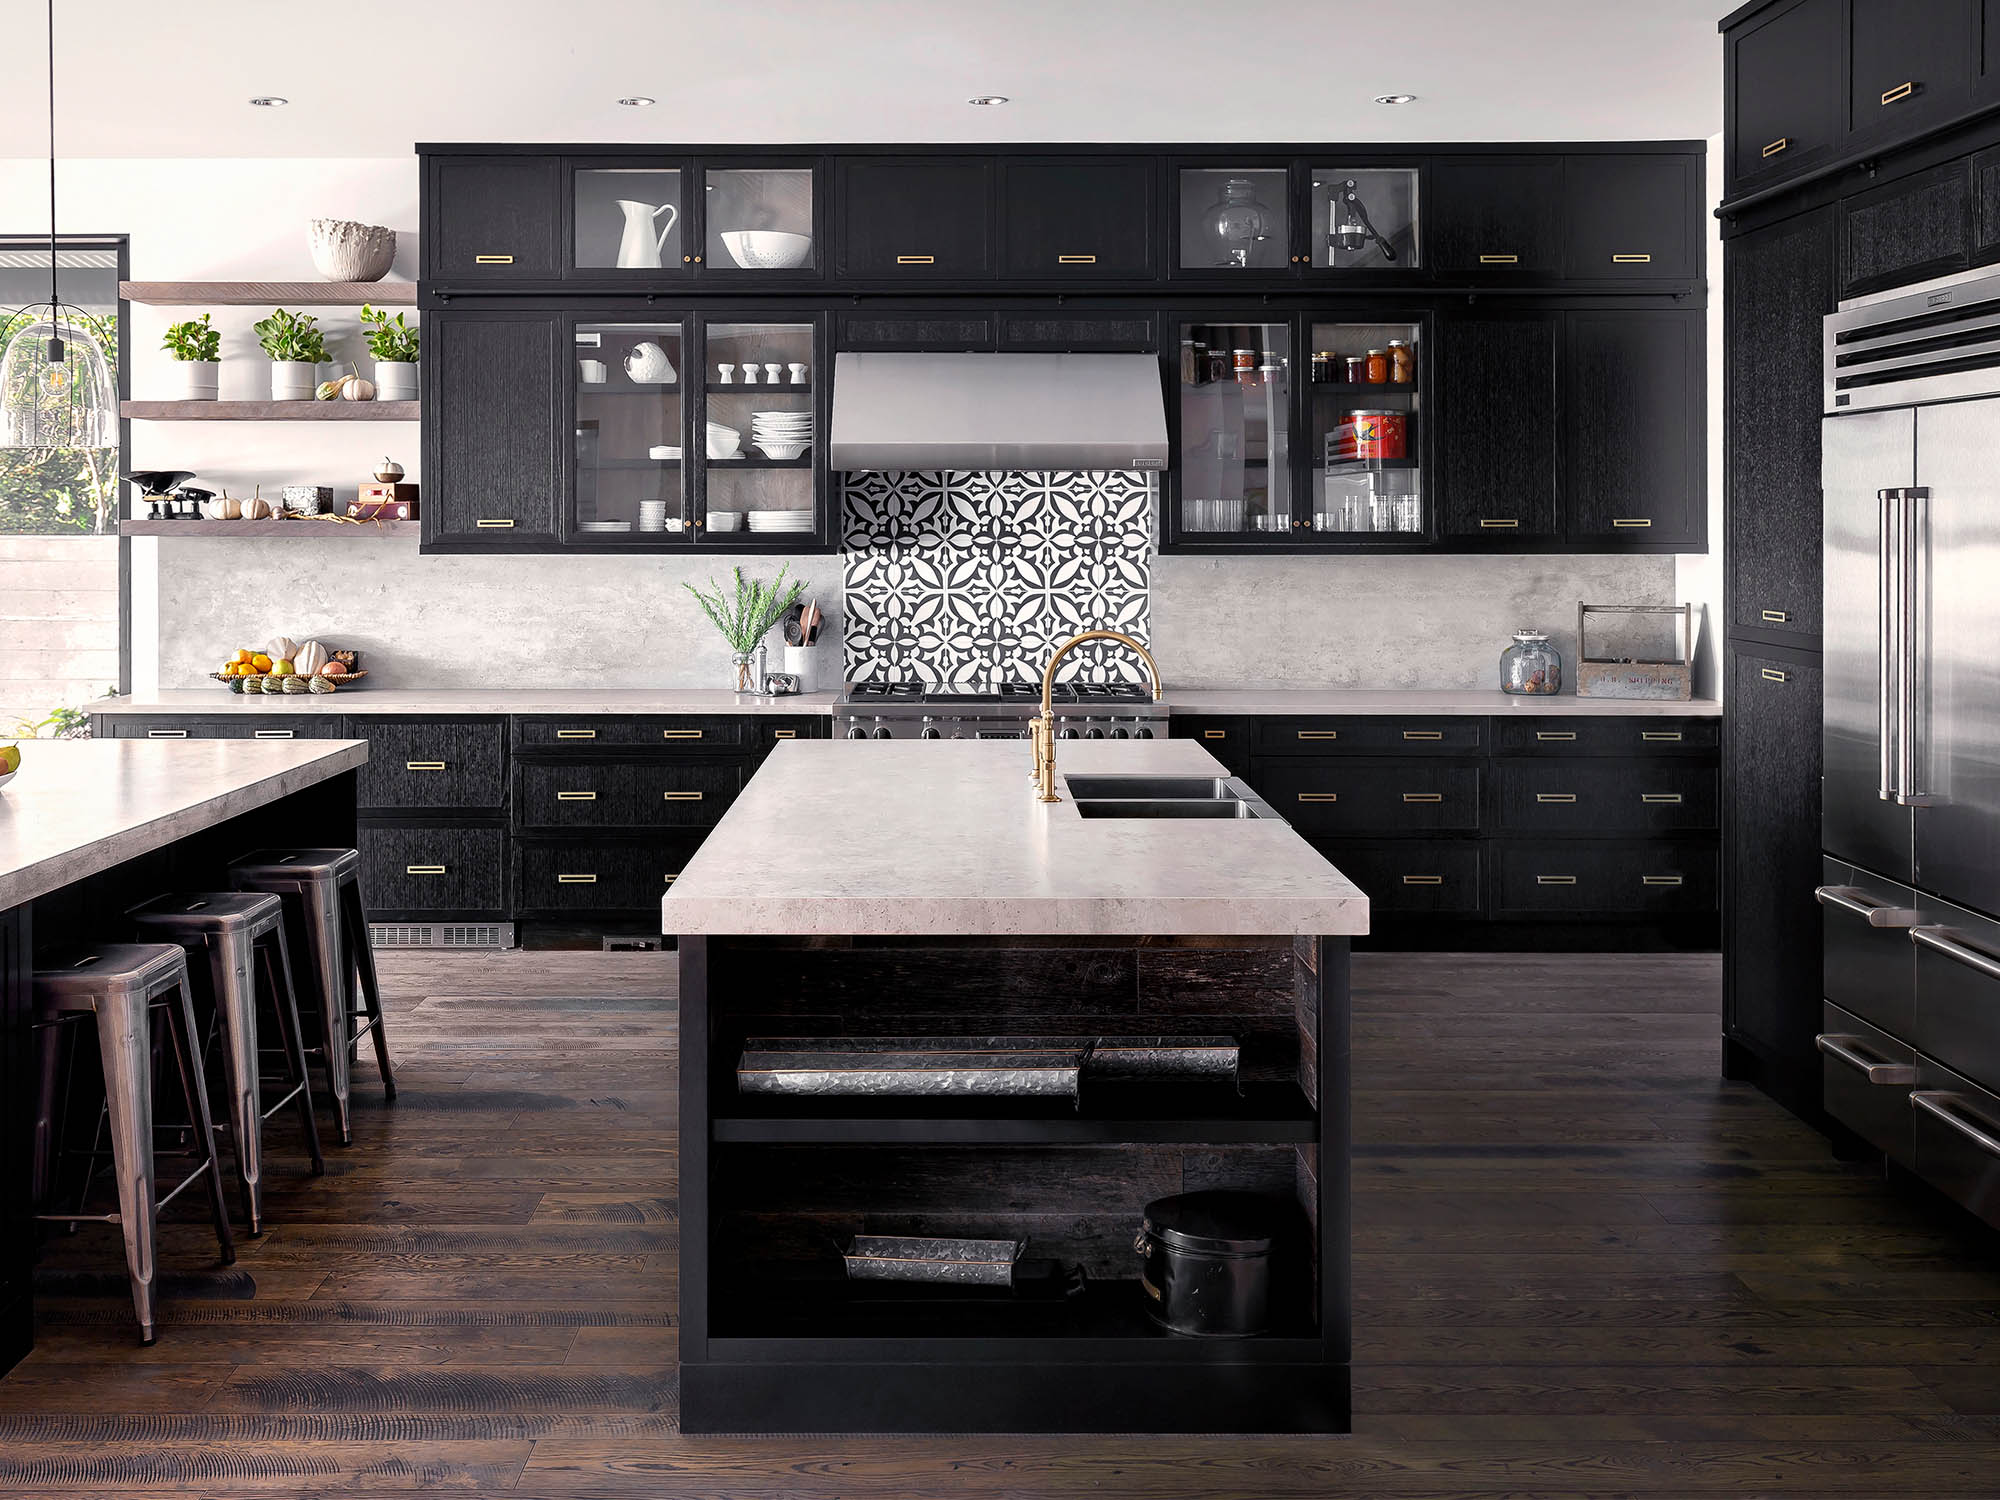 Modern dark wood kitchen with white granite countertops and Moroccan tile backsplash.